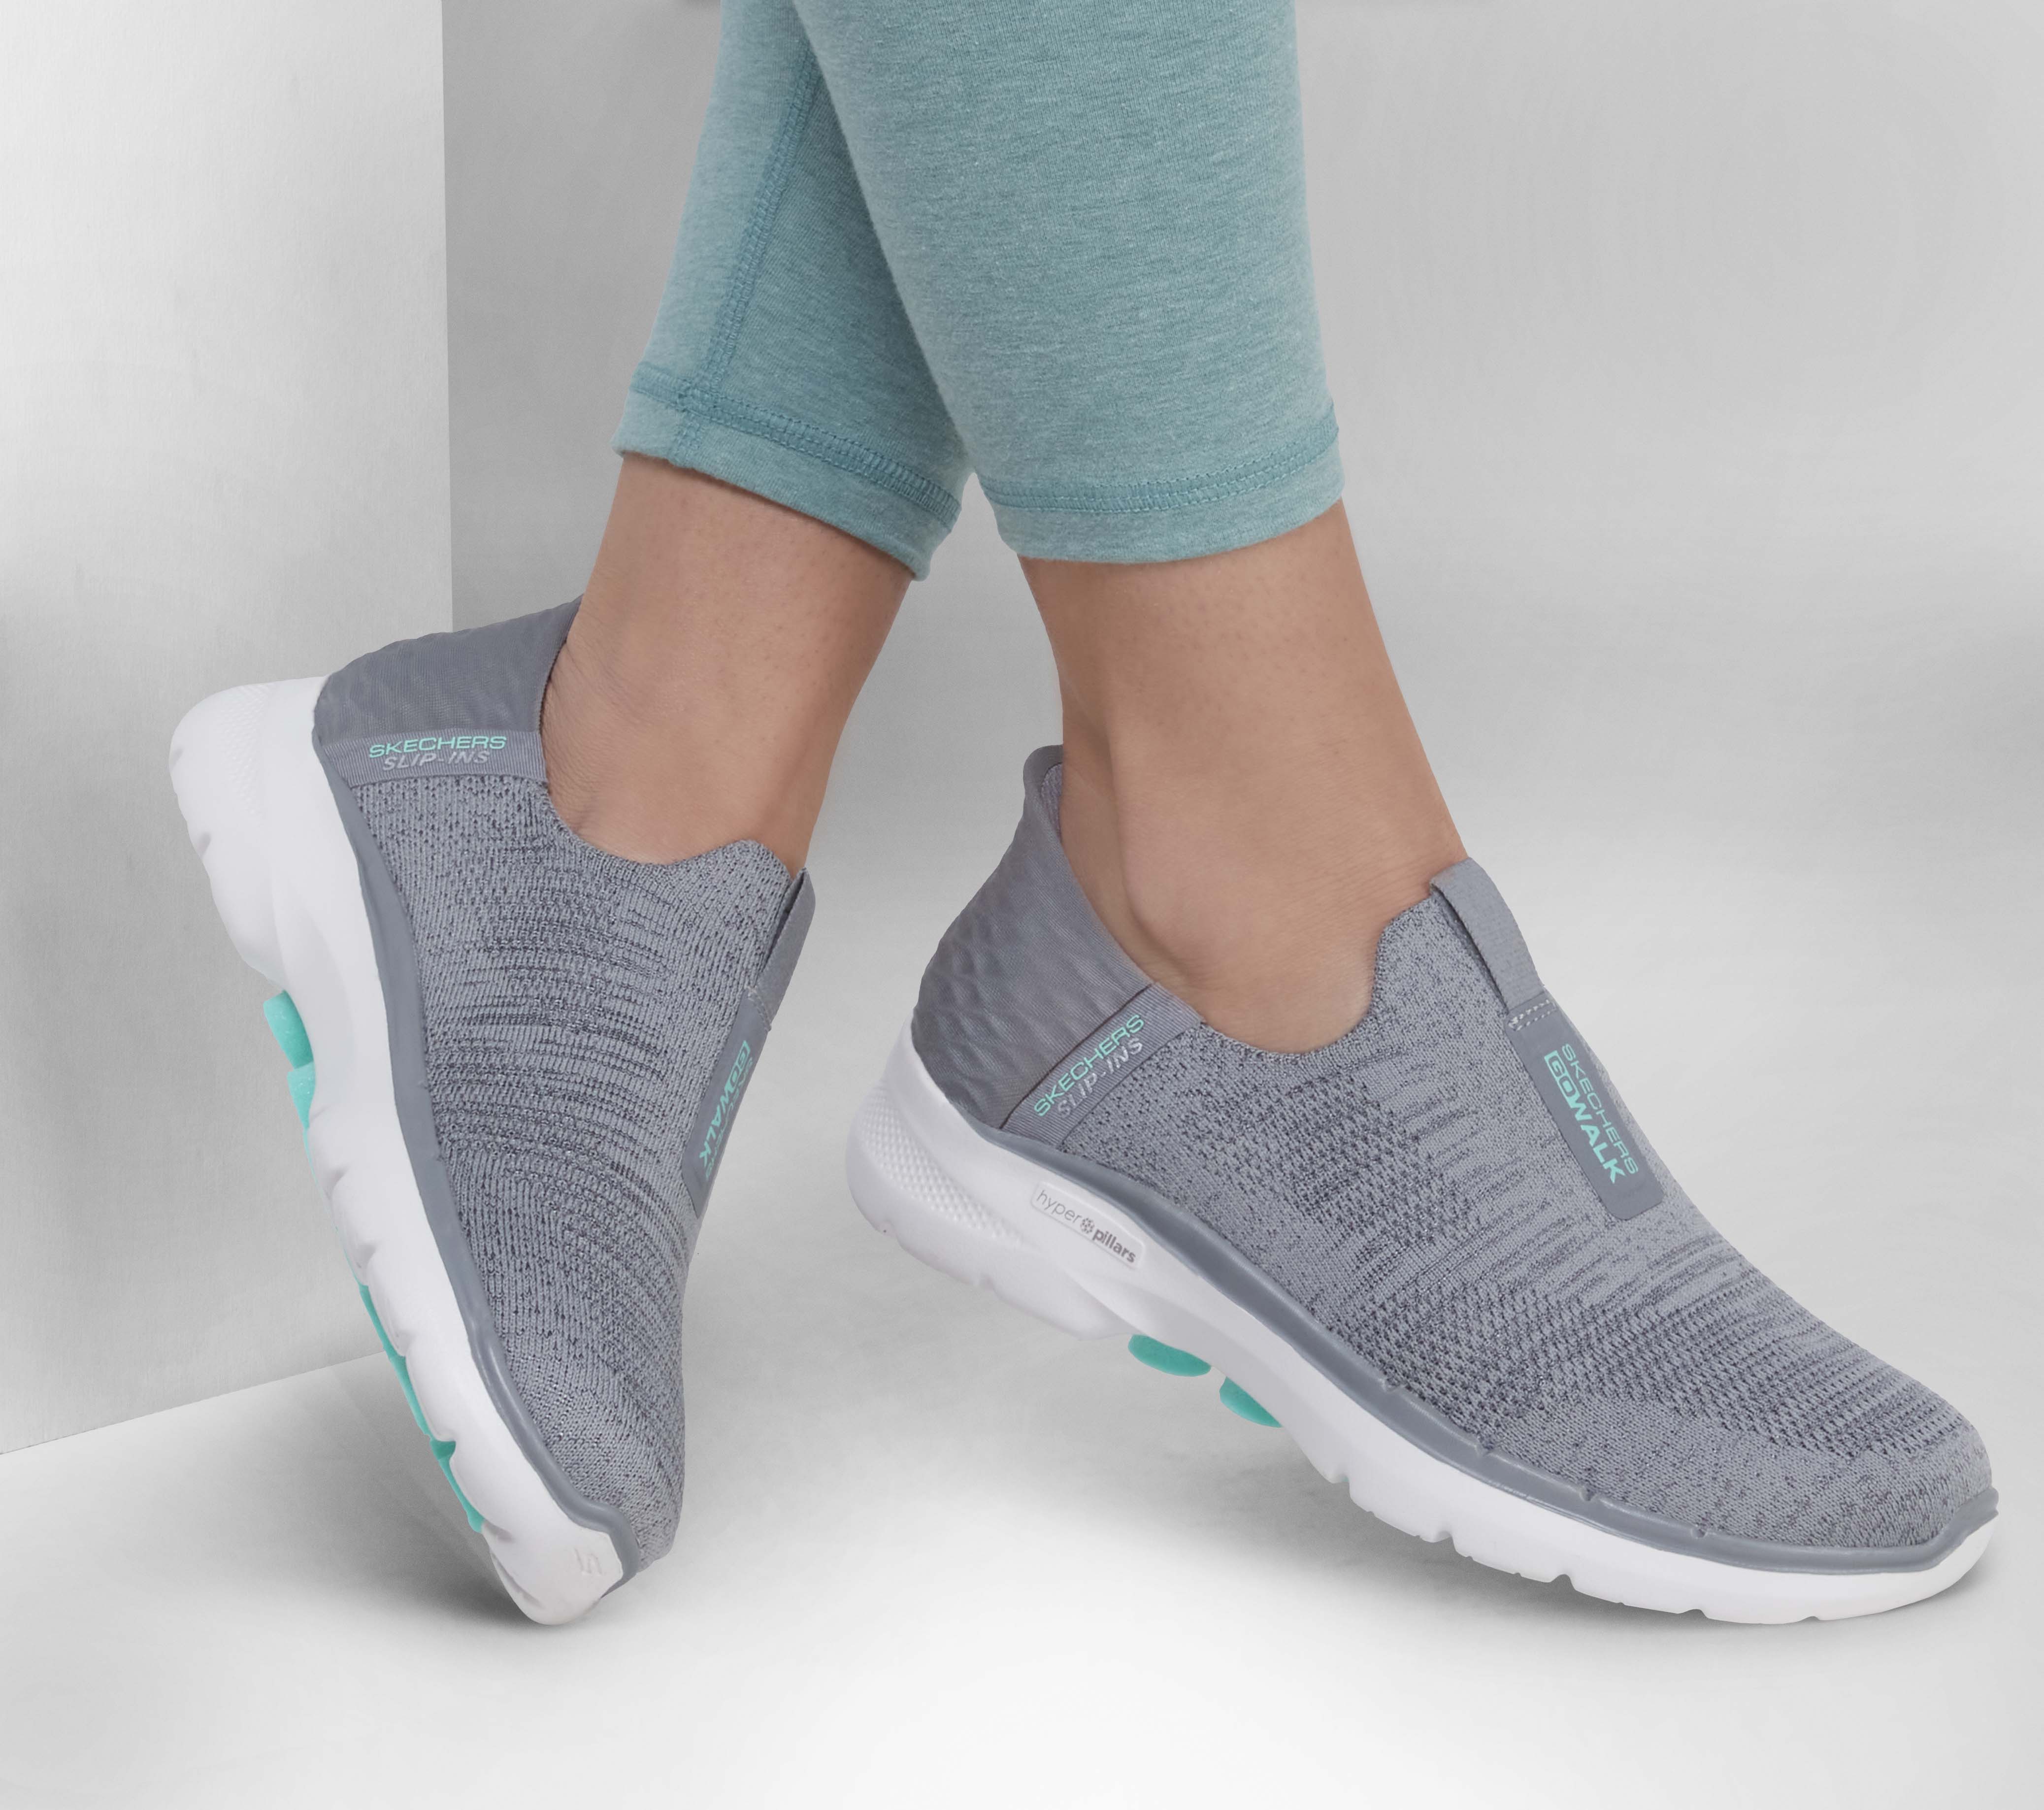 Clothing & Shoes - Socks & Underwear - Bras - Skechers GoWalk Linear Floral Zip  Front Bra - Online Shopping for Canadians